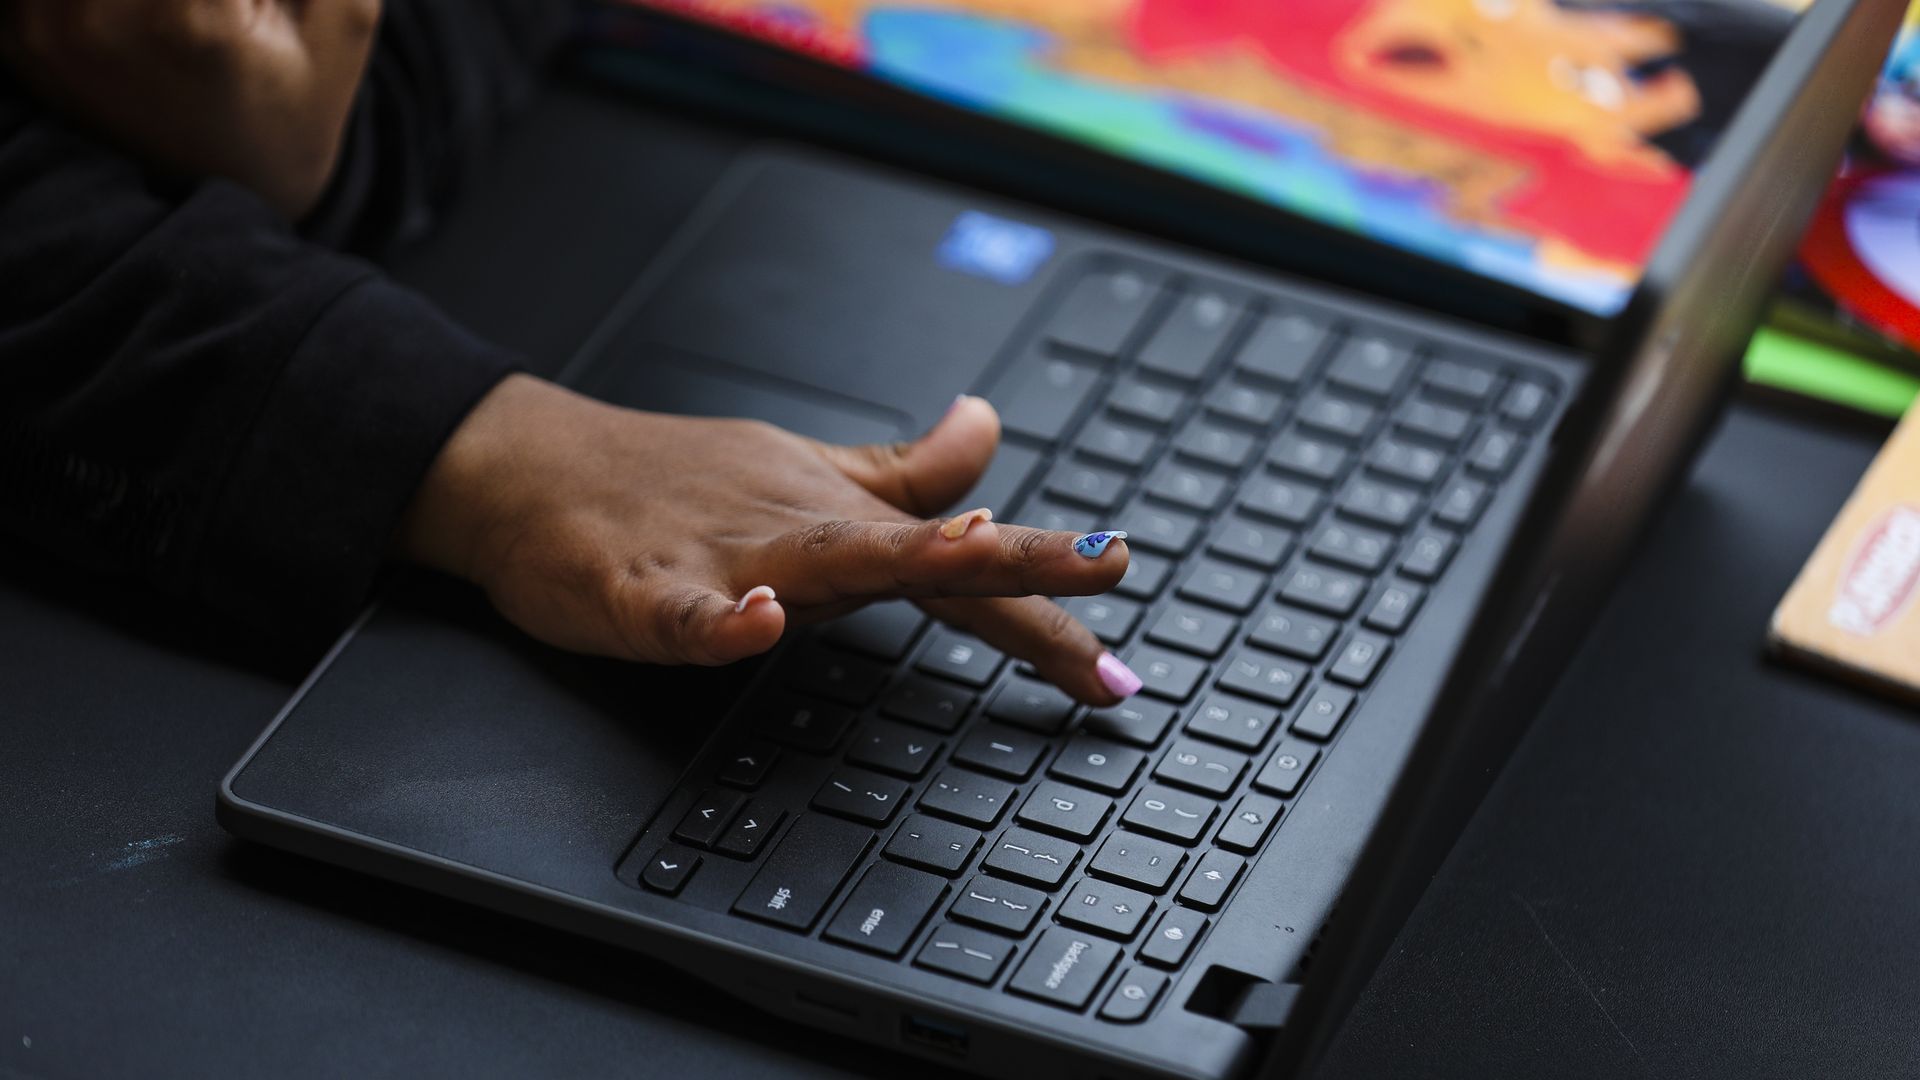 a hand pressing a key on a laptop keyboard